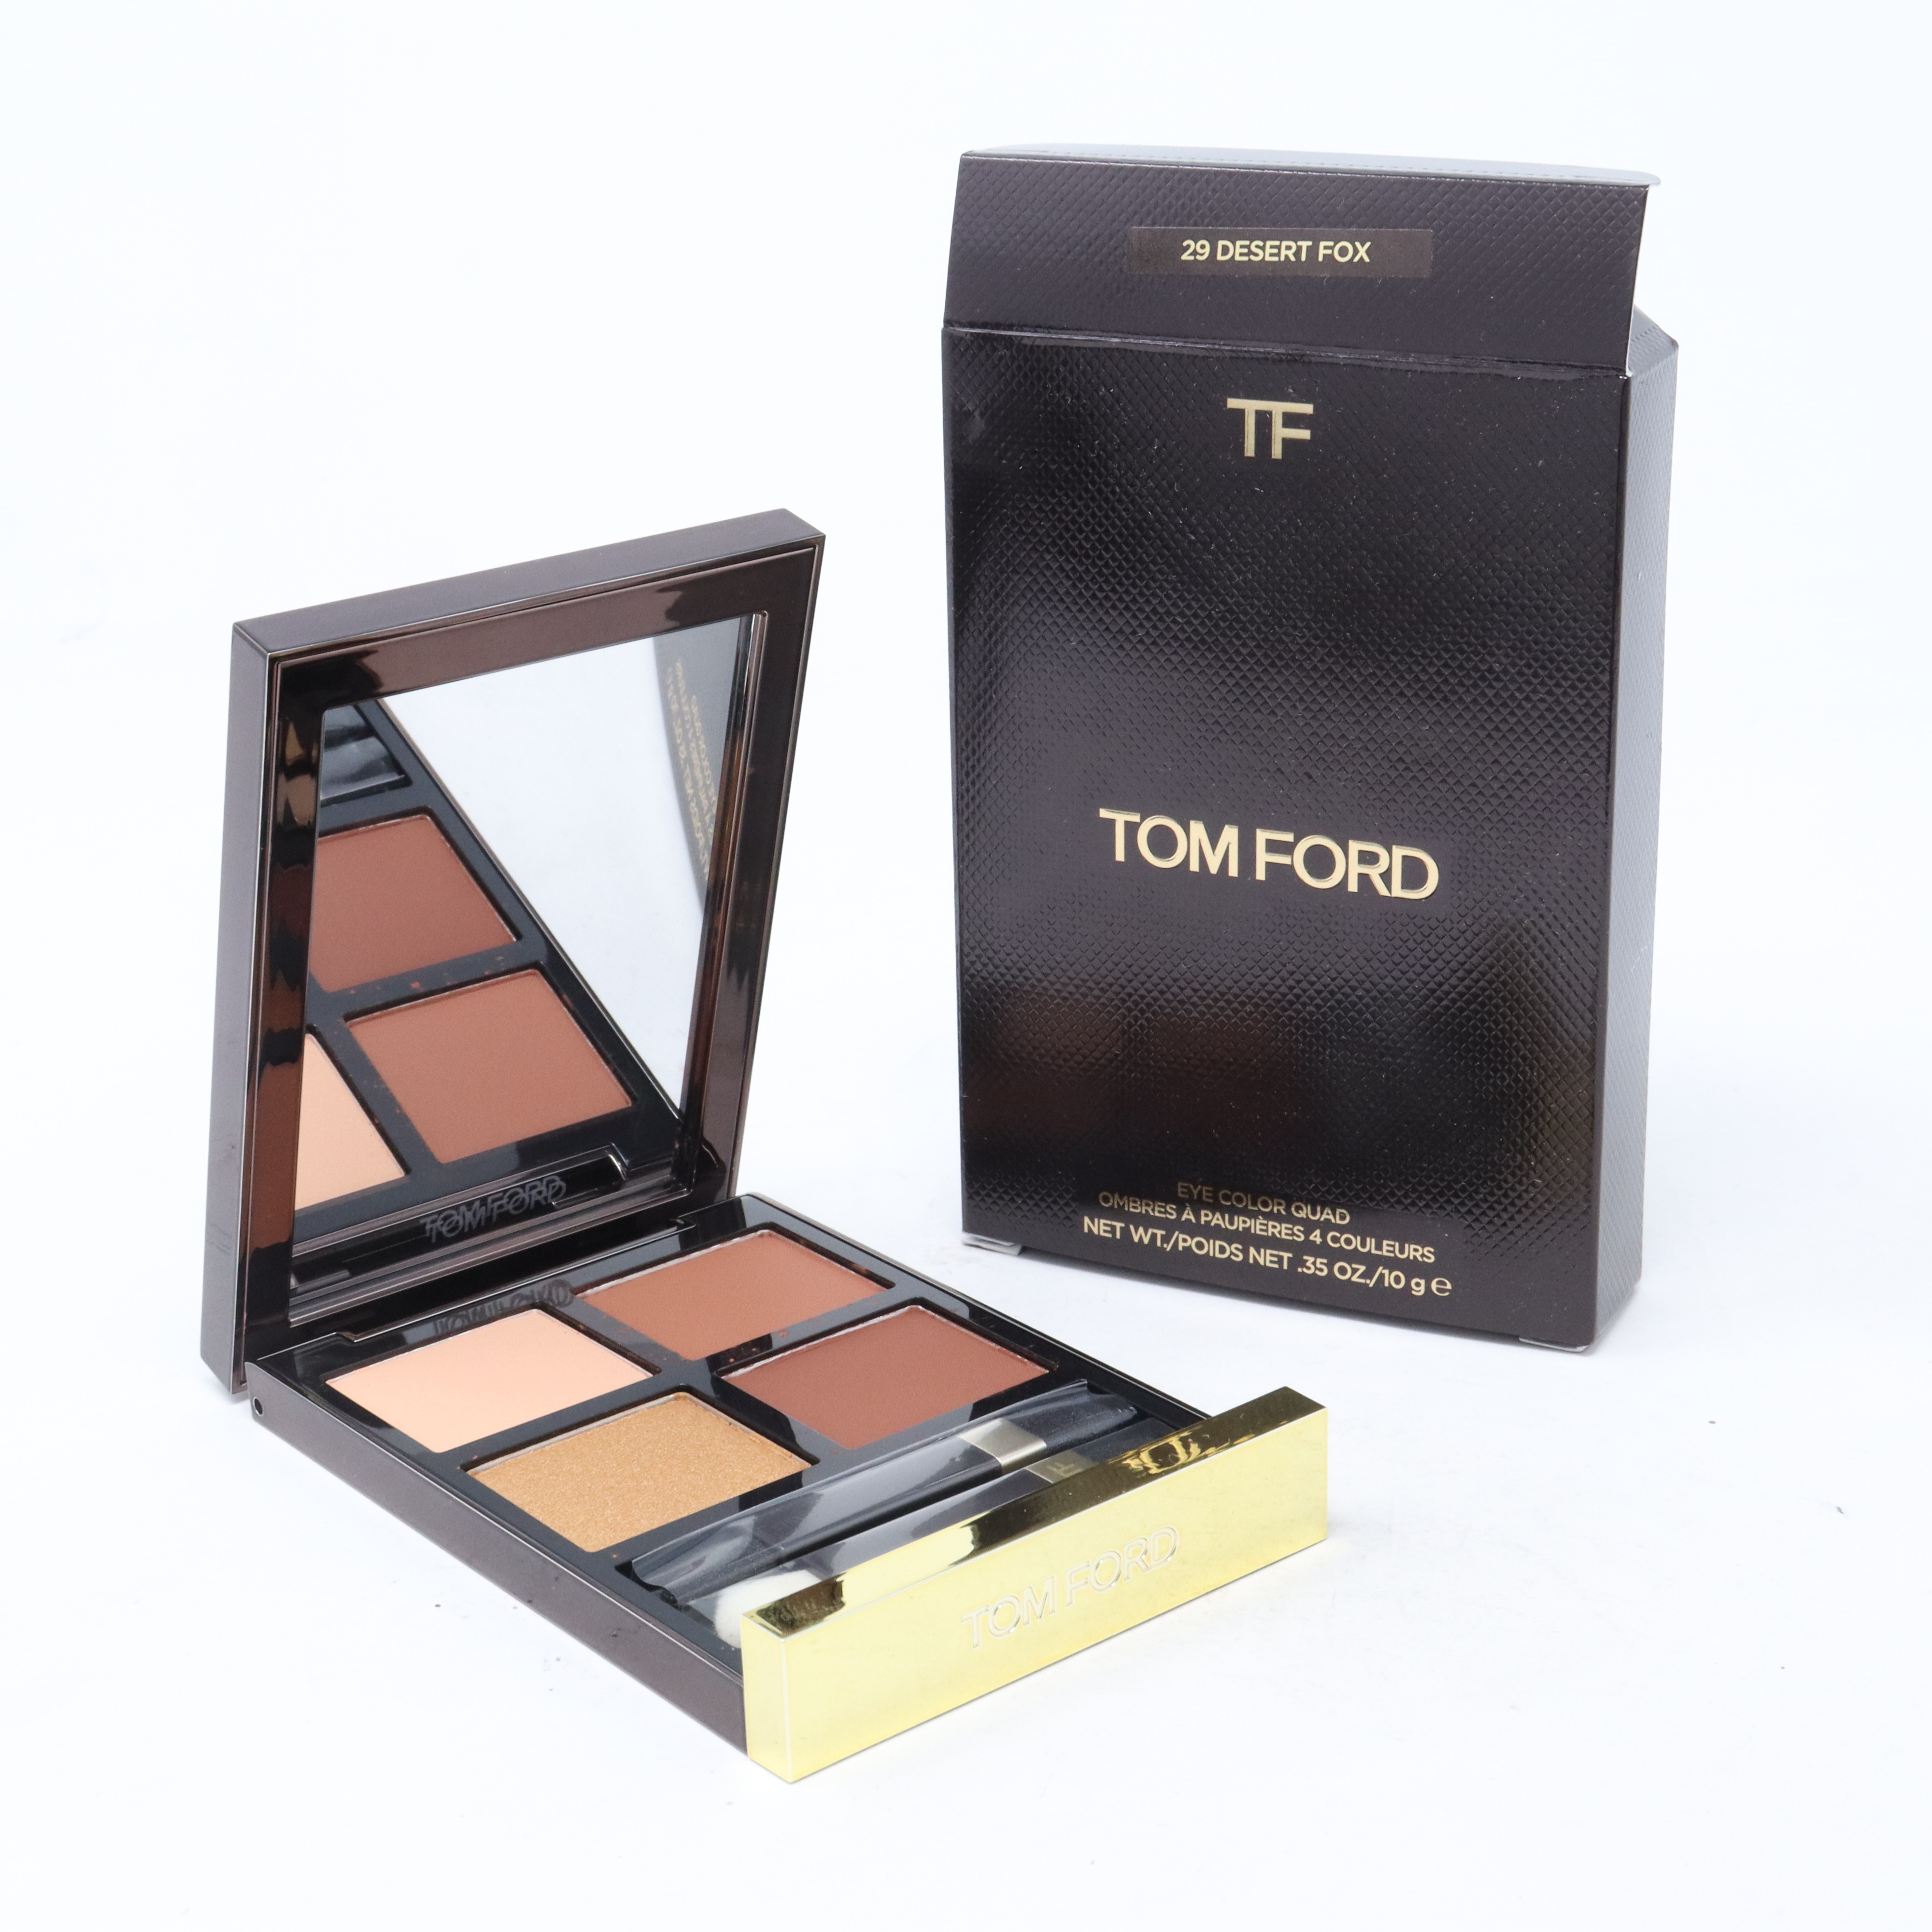 Tom Ford Eye Color Quad 0.35oz/10g New In Box | eBay